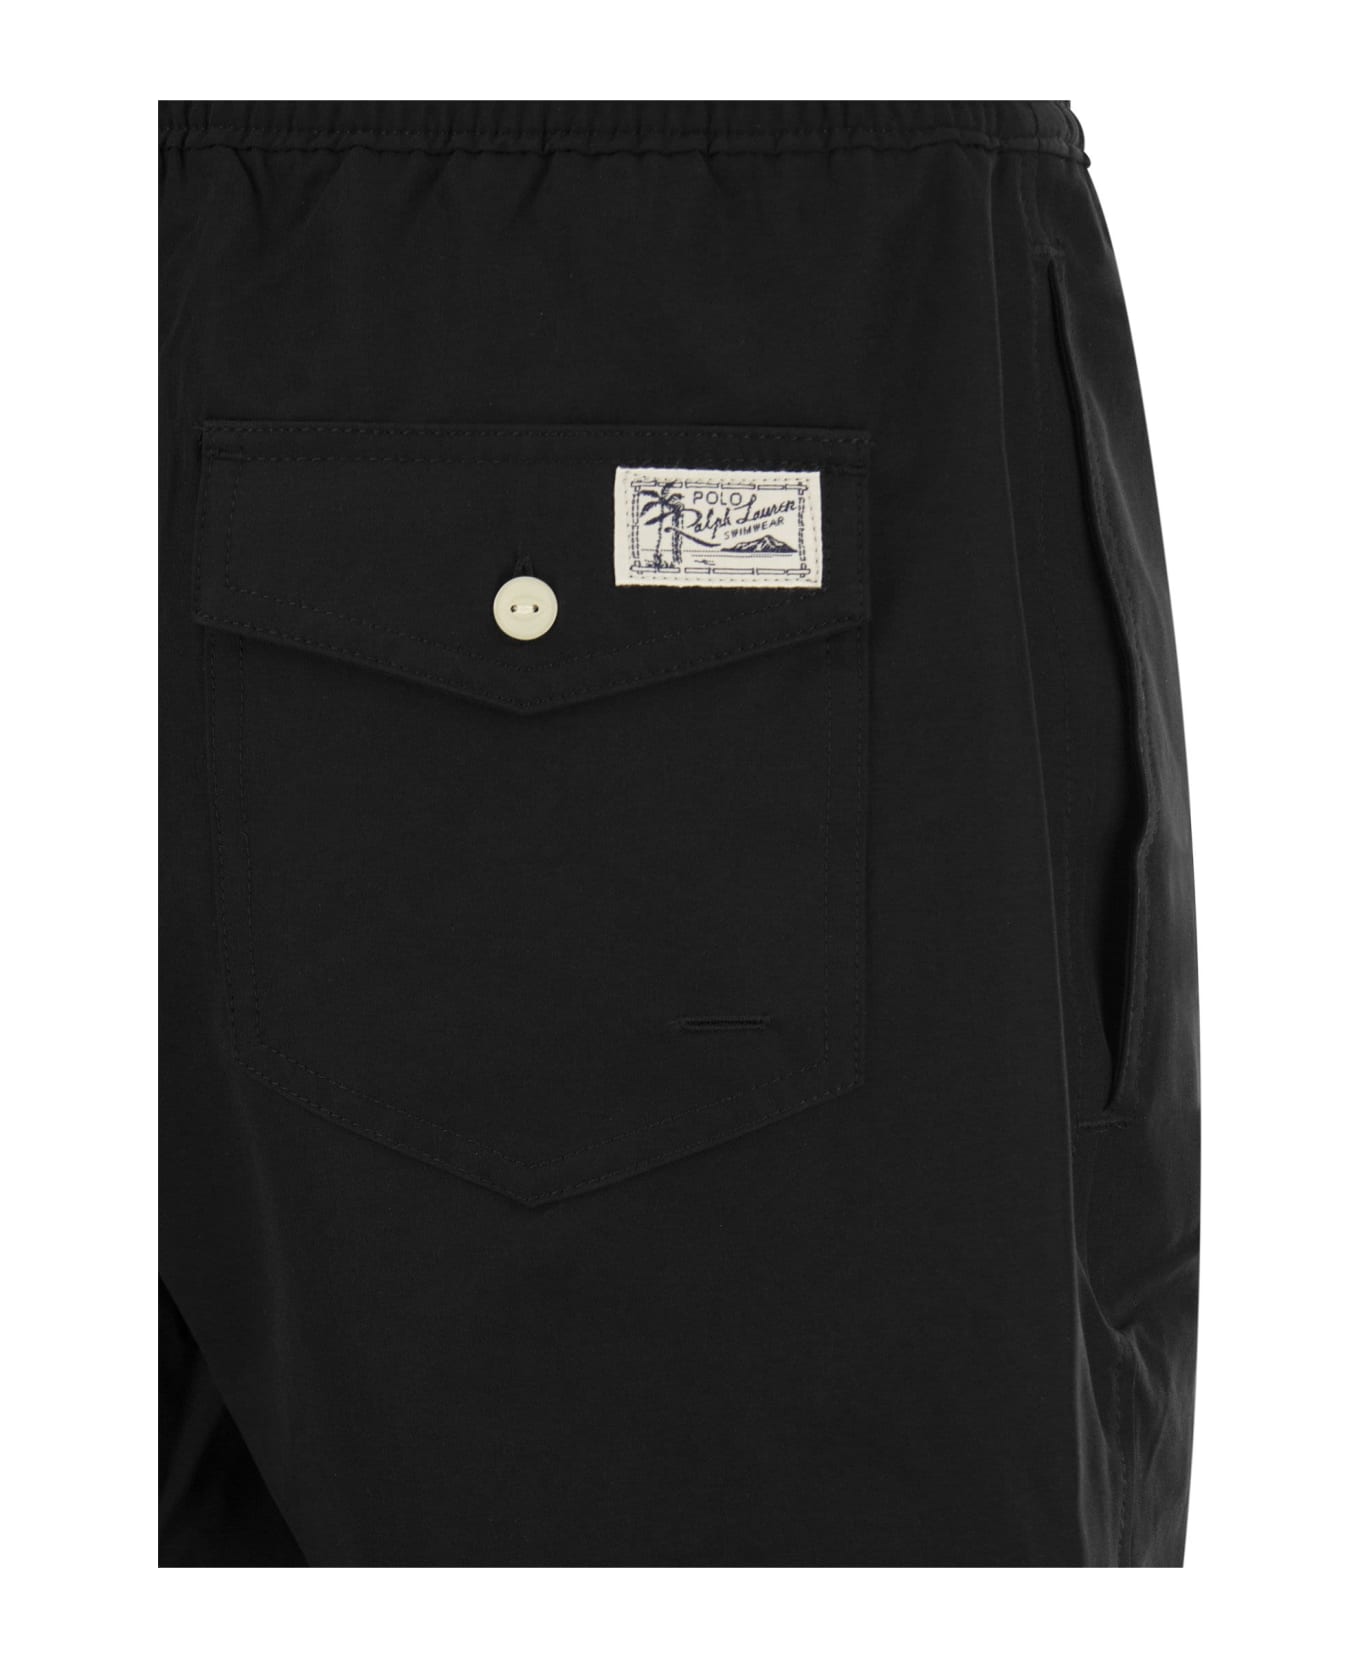 Polo Ralph Lauren Black Stretch Polyester Swimming Shorts - POLOBLK 水着